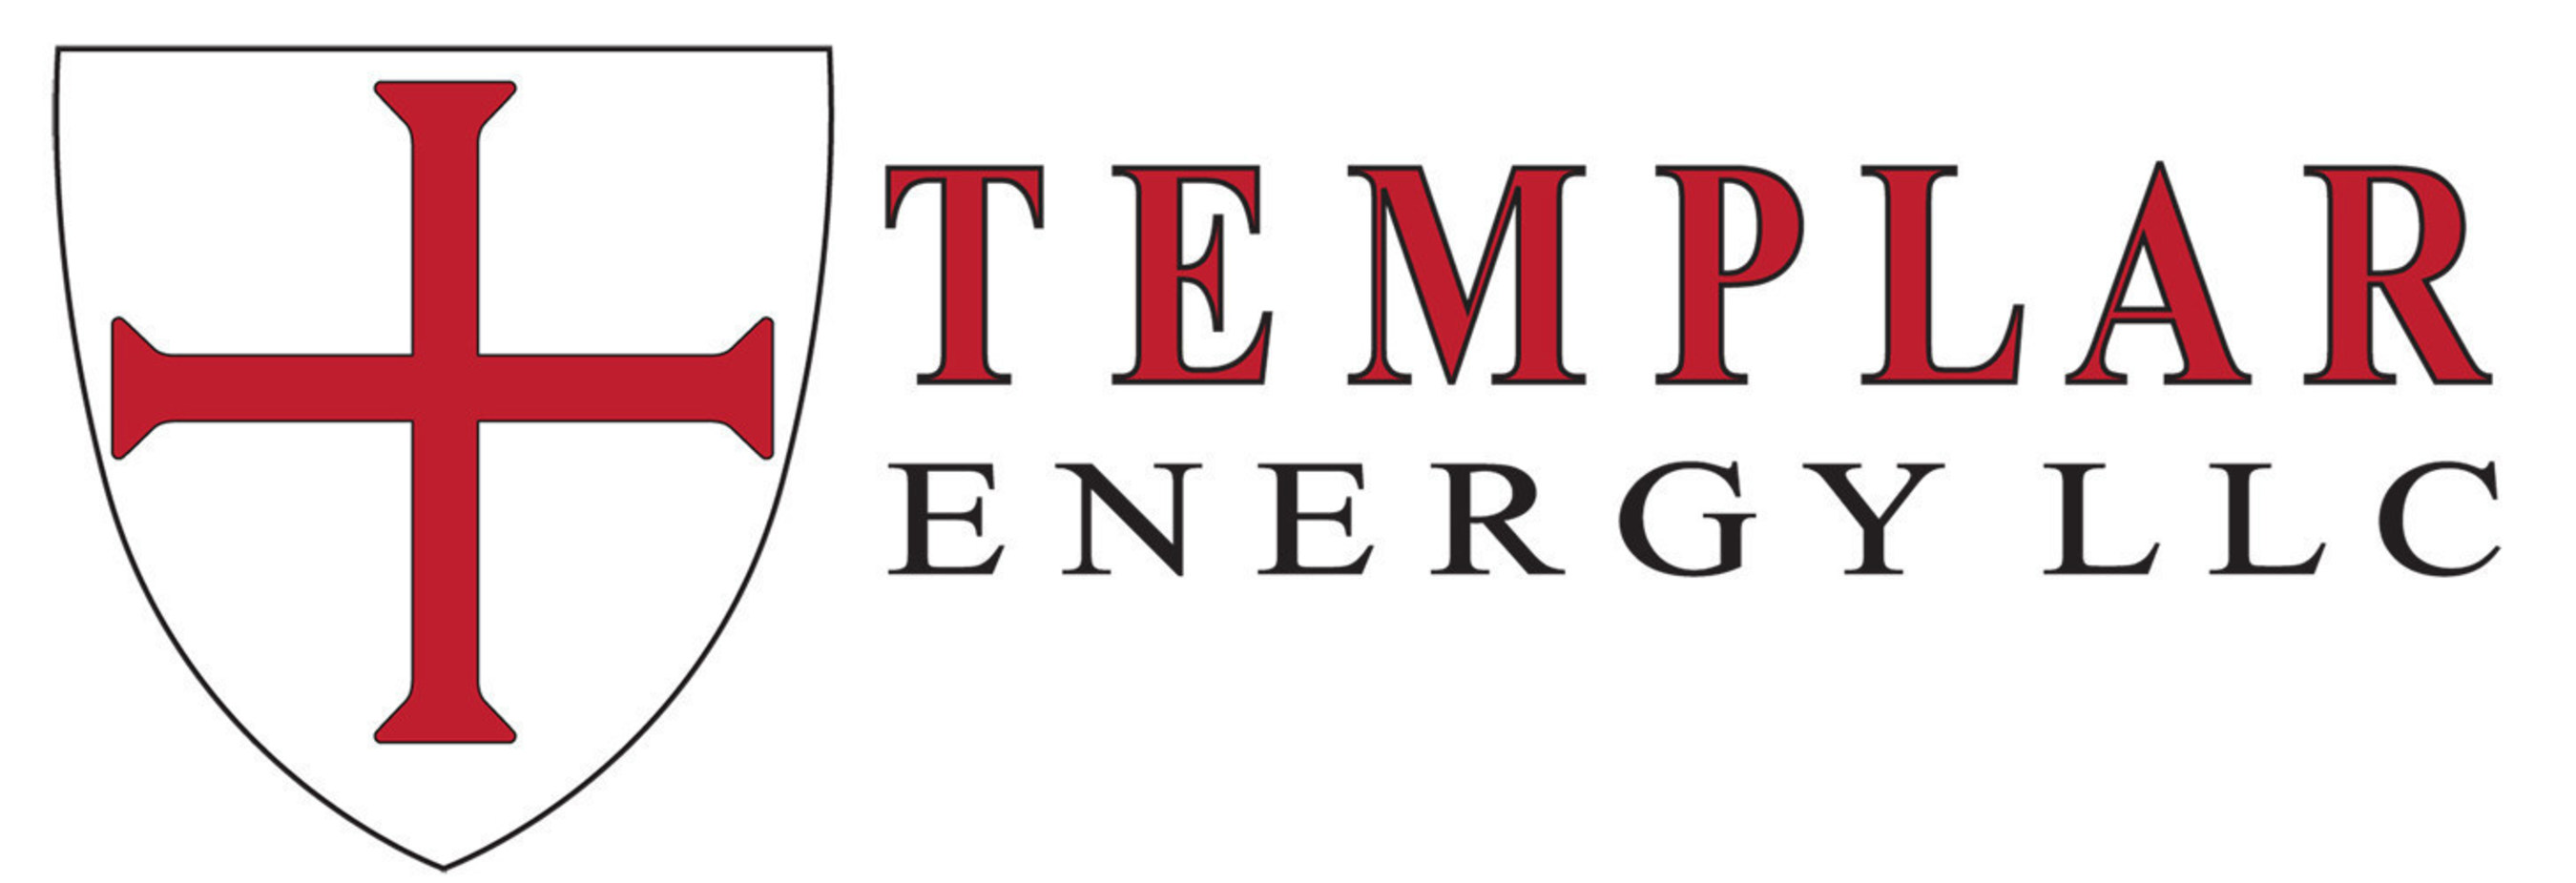 TEMPLAR ENERGY LLC logo (PRNewsFoto/Templar Energy LLC)